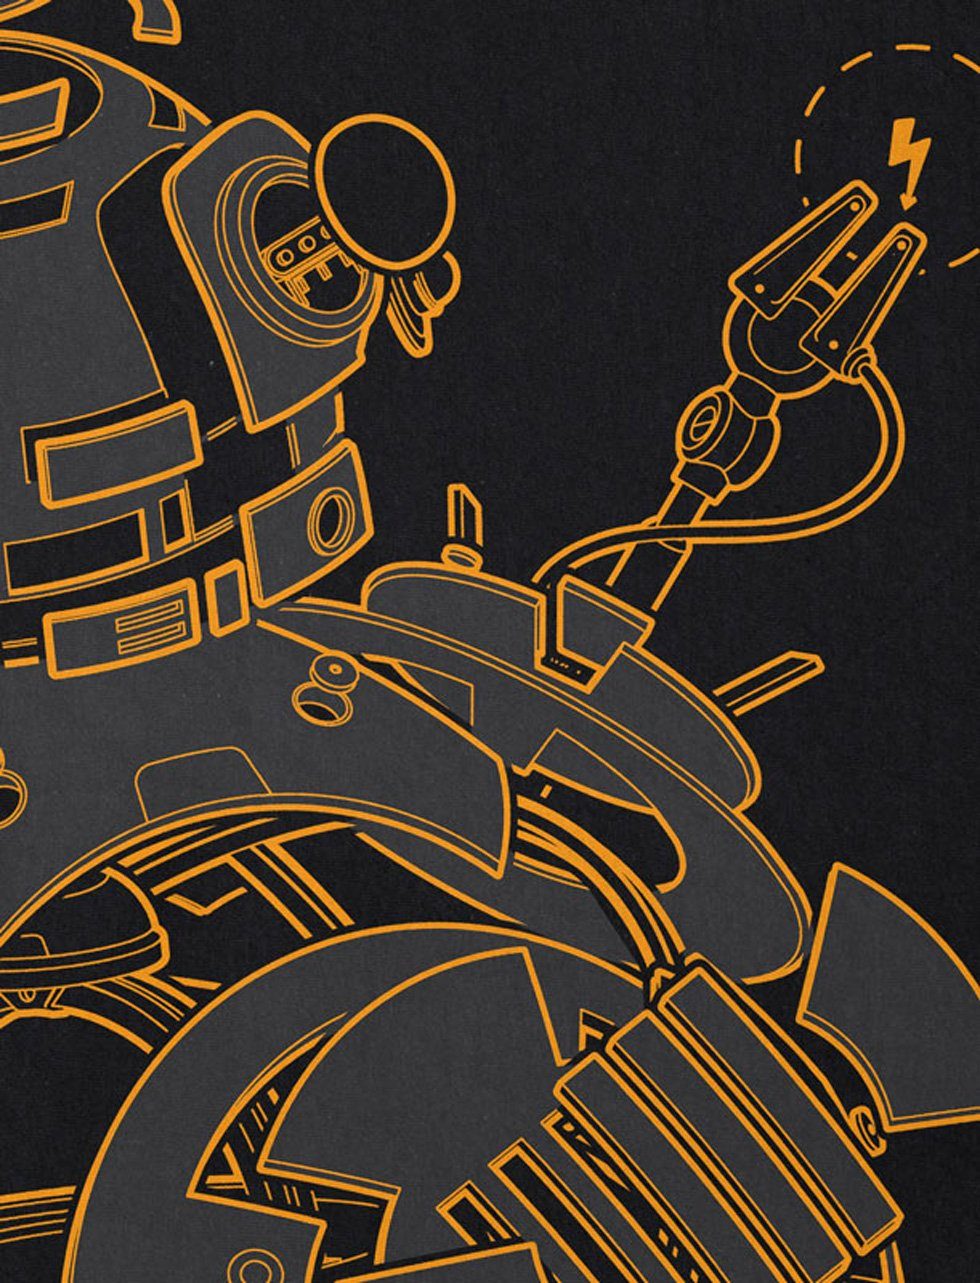 Herren BB-8 style3 astro Print-Shirt droide T-Shirt explosionsansicht roboter